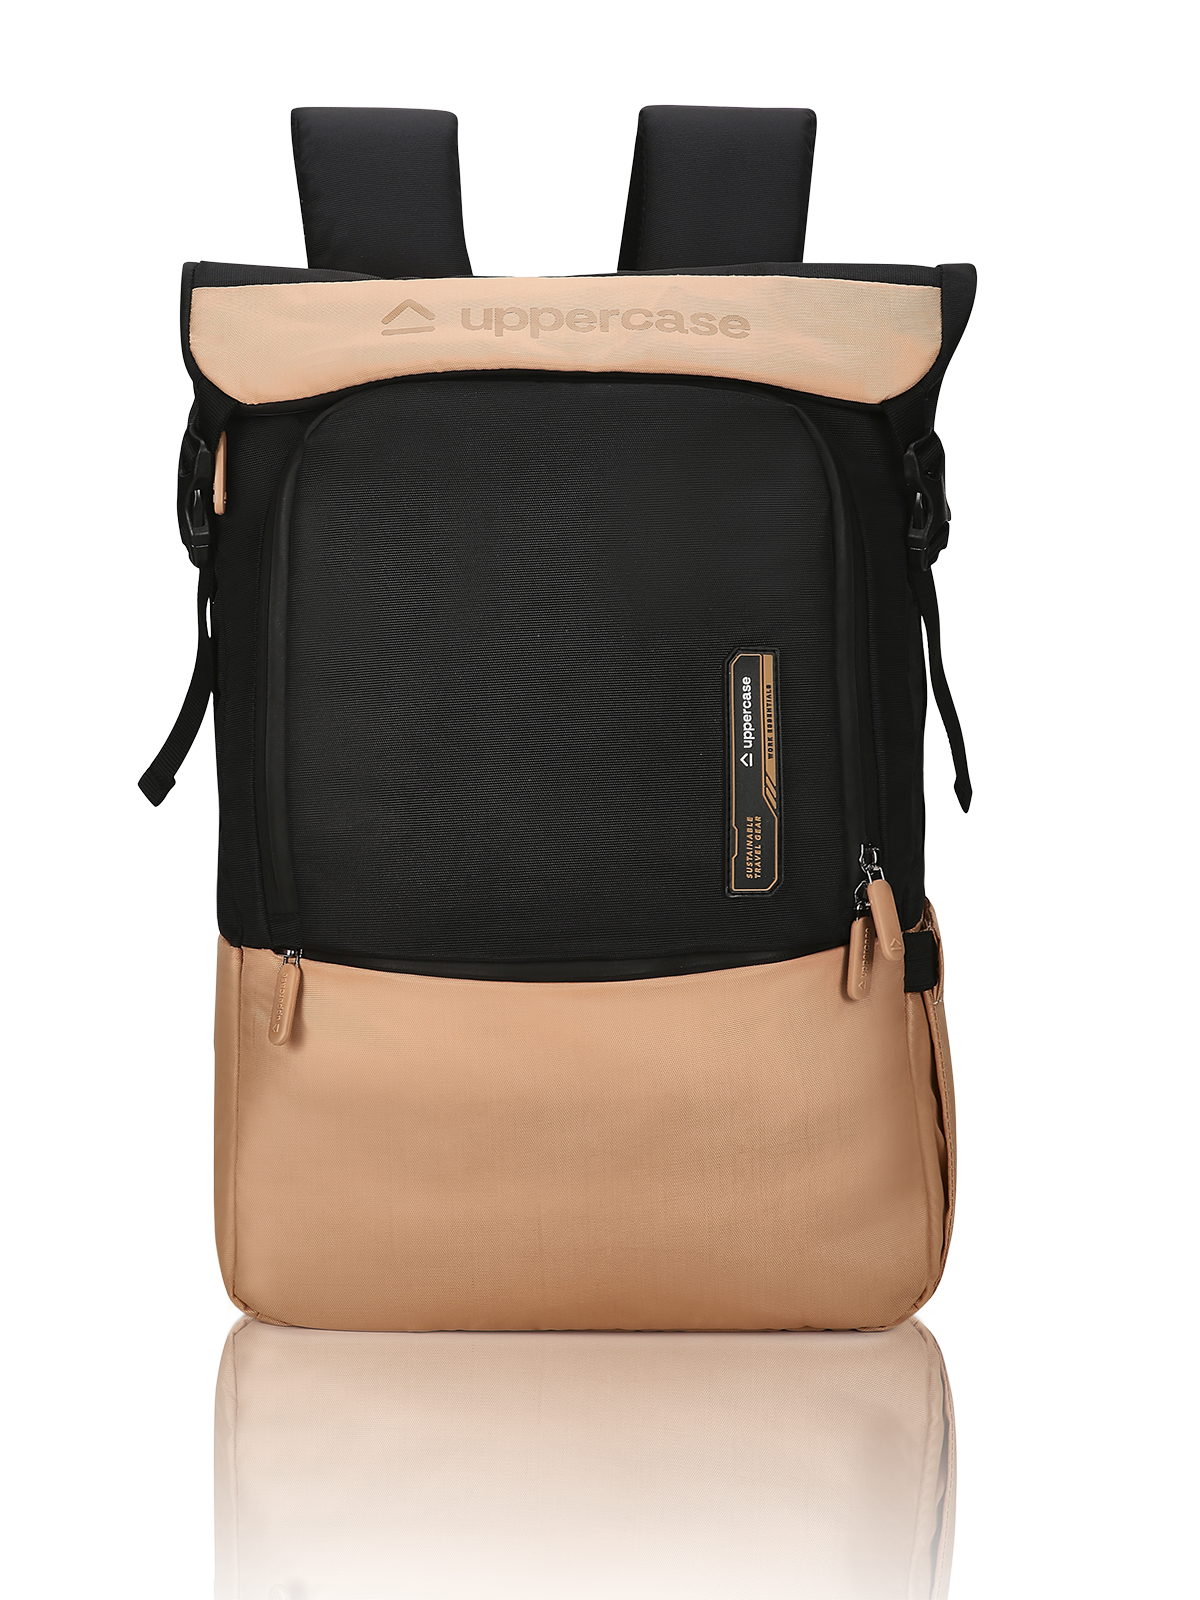 Chicco's Car Seat Travel Bag | ChiccoUSA